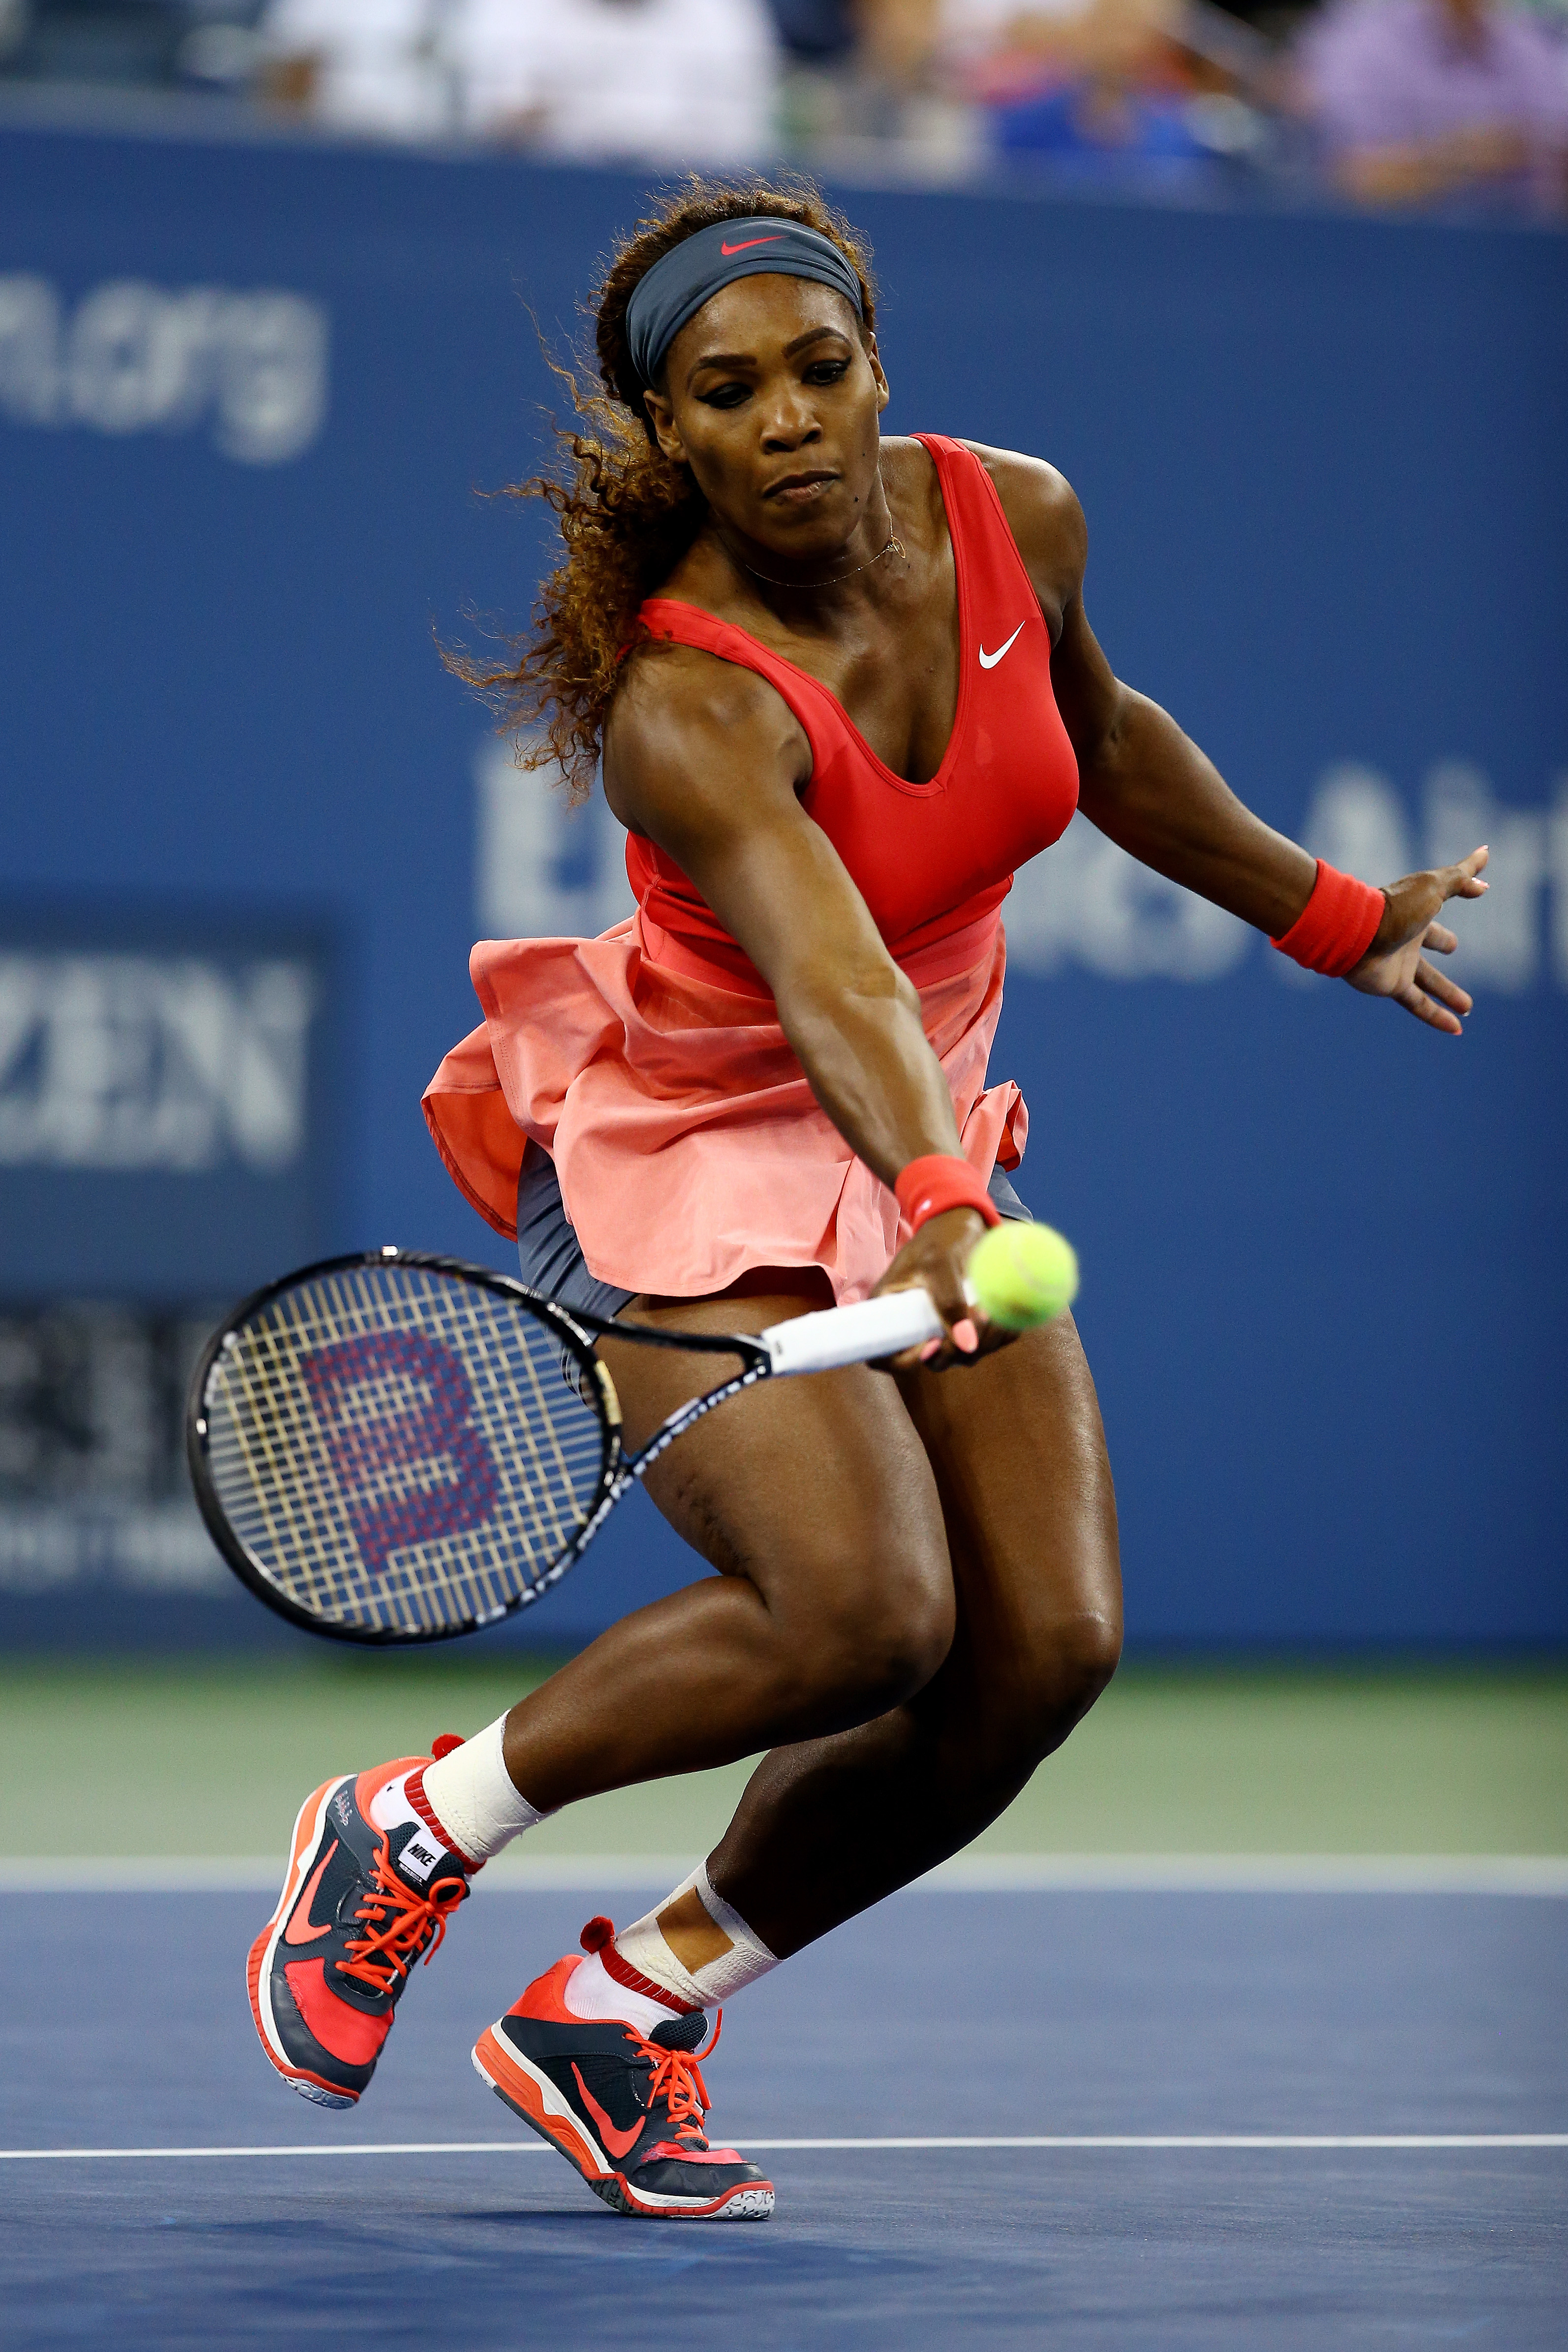 Serena Williams Wins the 2013 U.S. Open in the Nike Lunar Mirabella 3